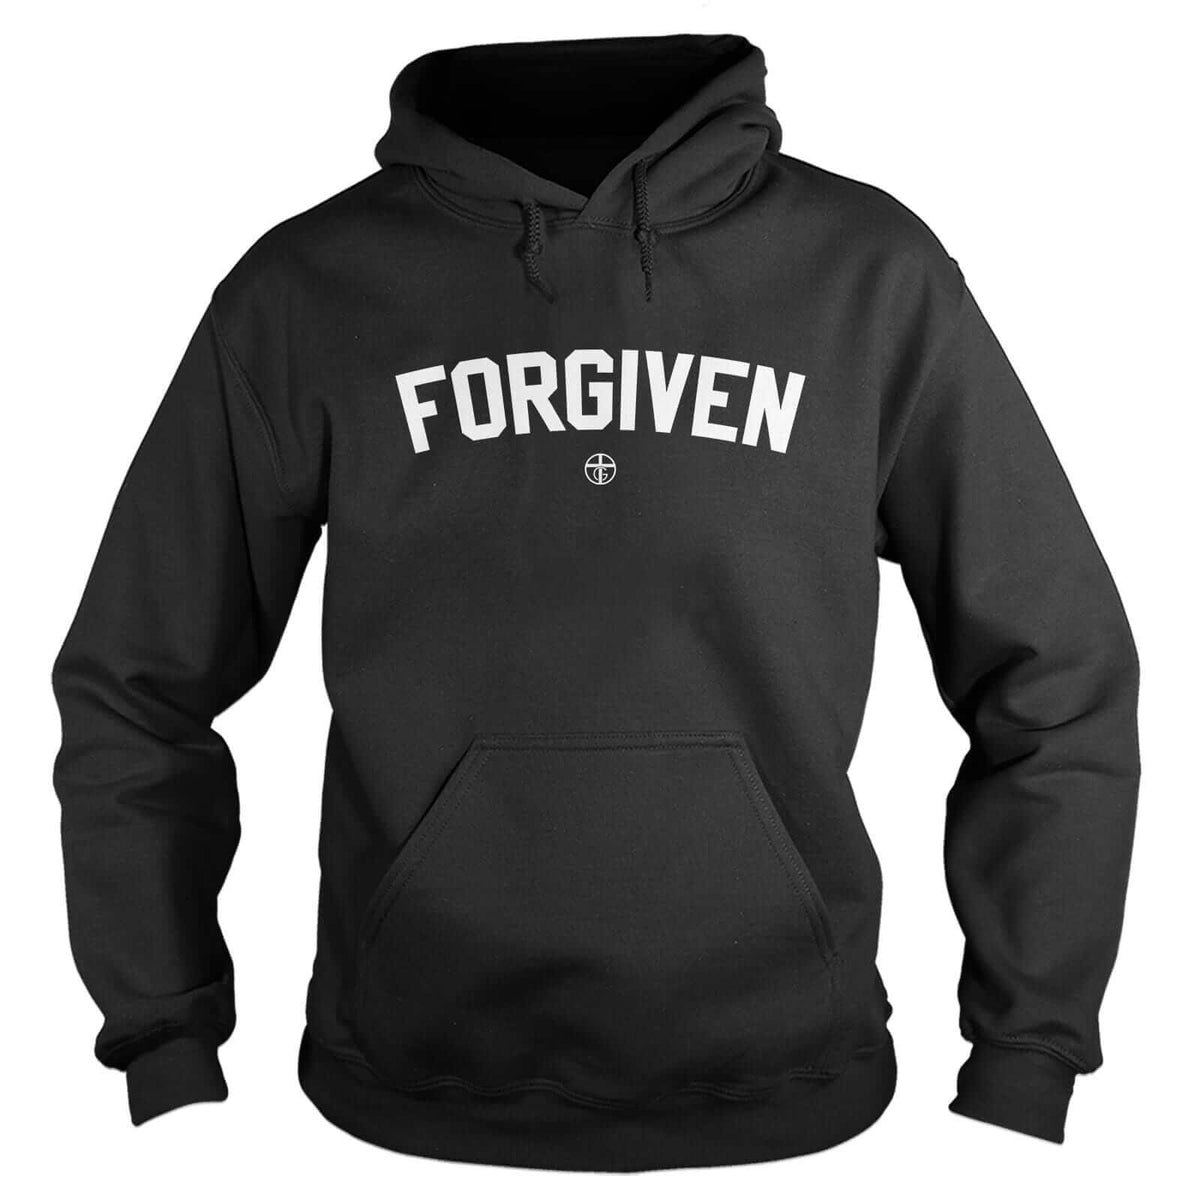 Forgiven Hoodie - Our True God